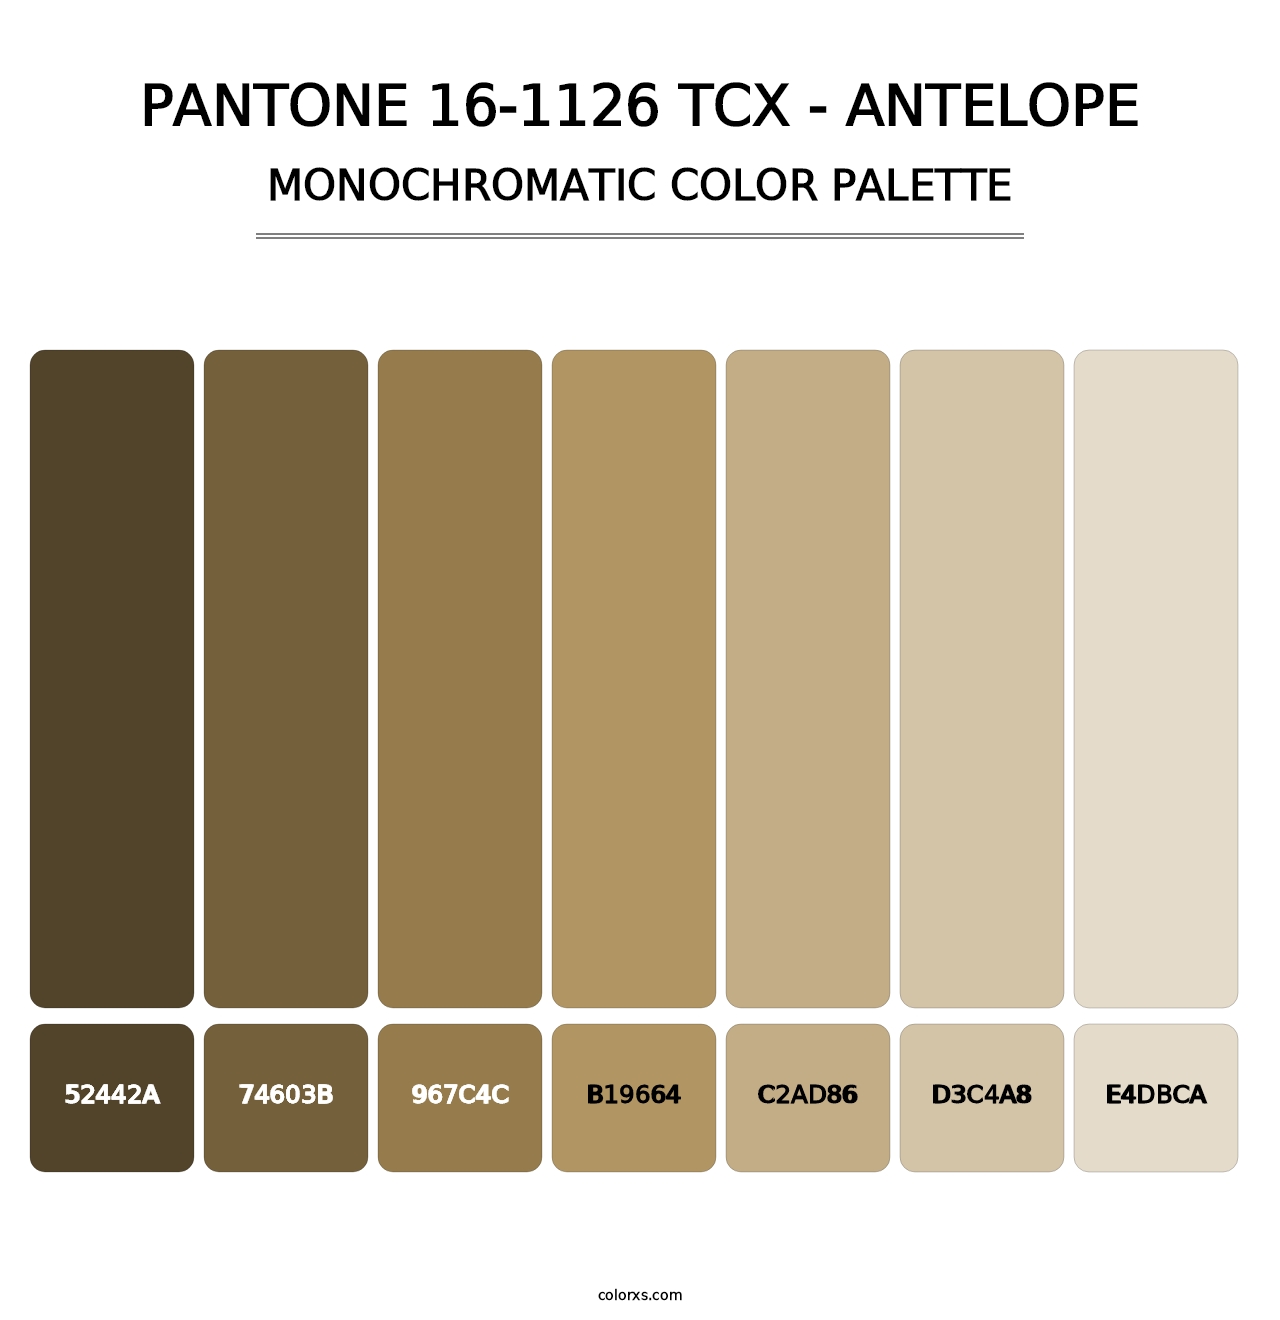 PANTONE 16-1126 TCX - Antelope - Monochromatic Color Palette